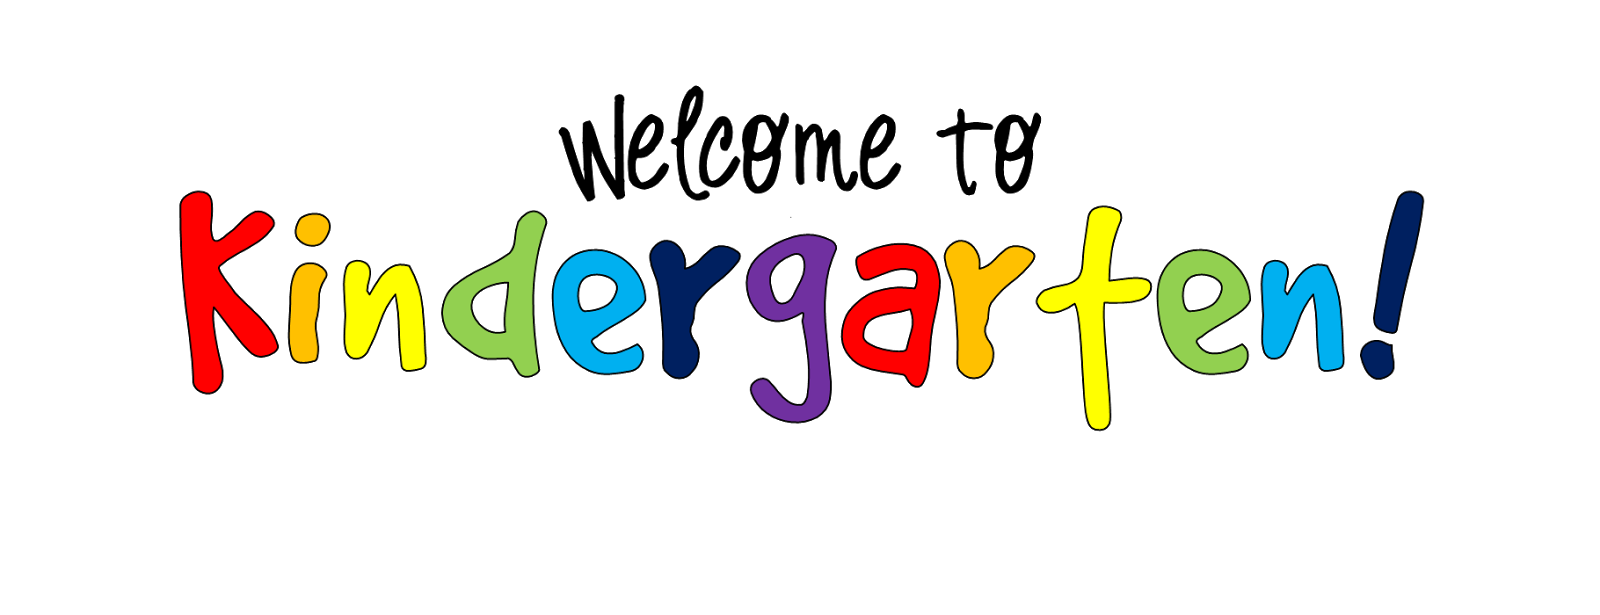 kindergarten clipart monday